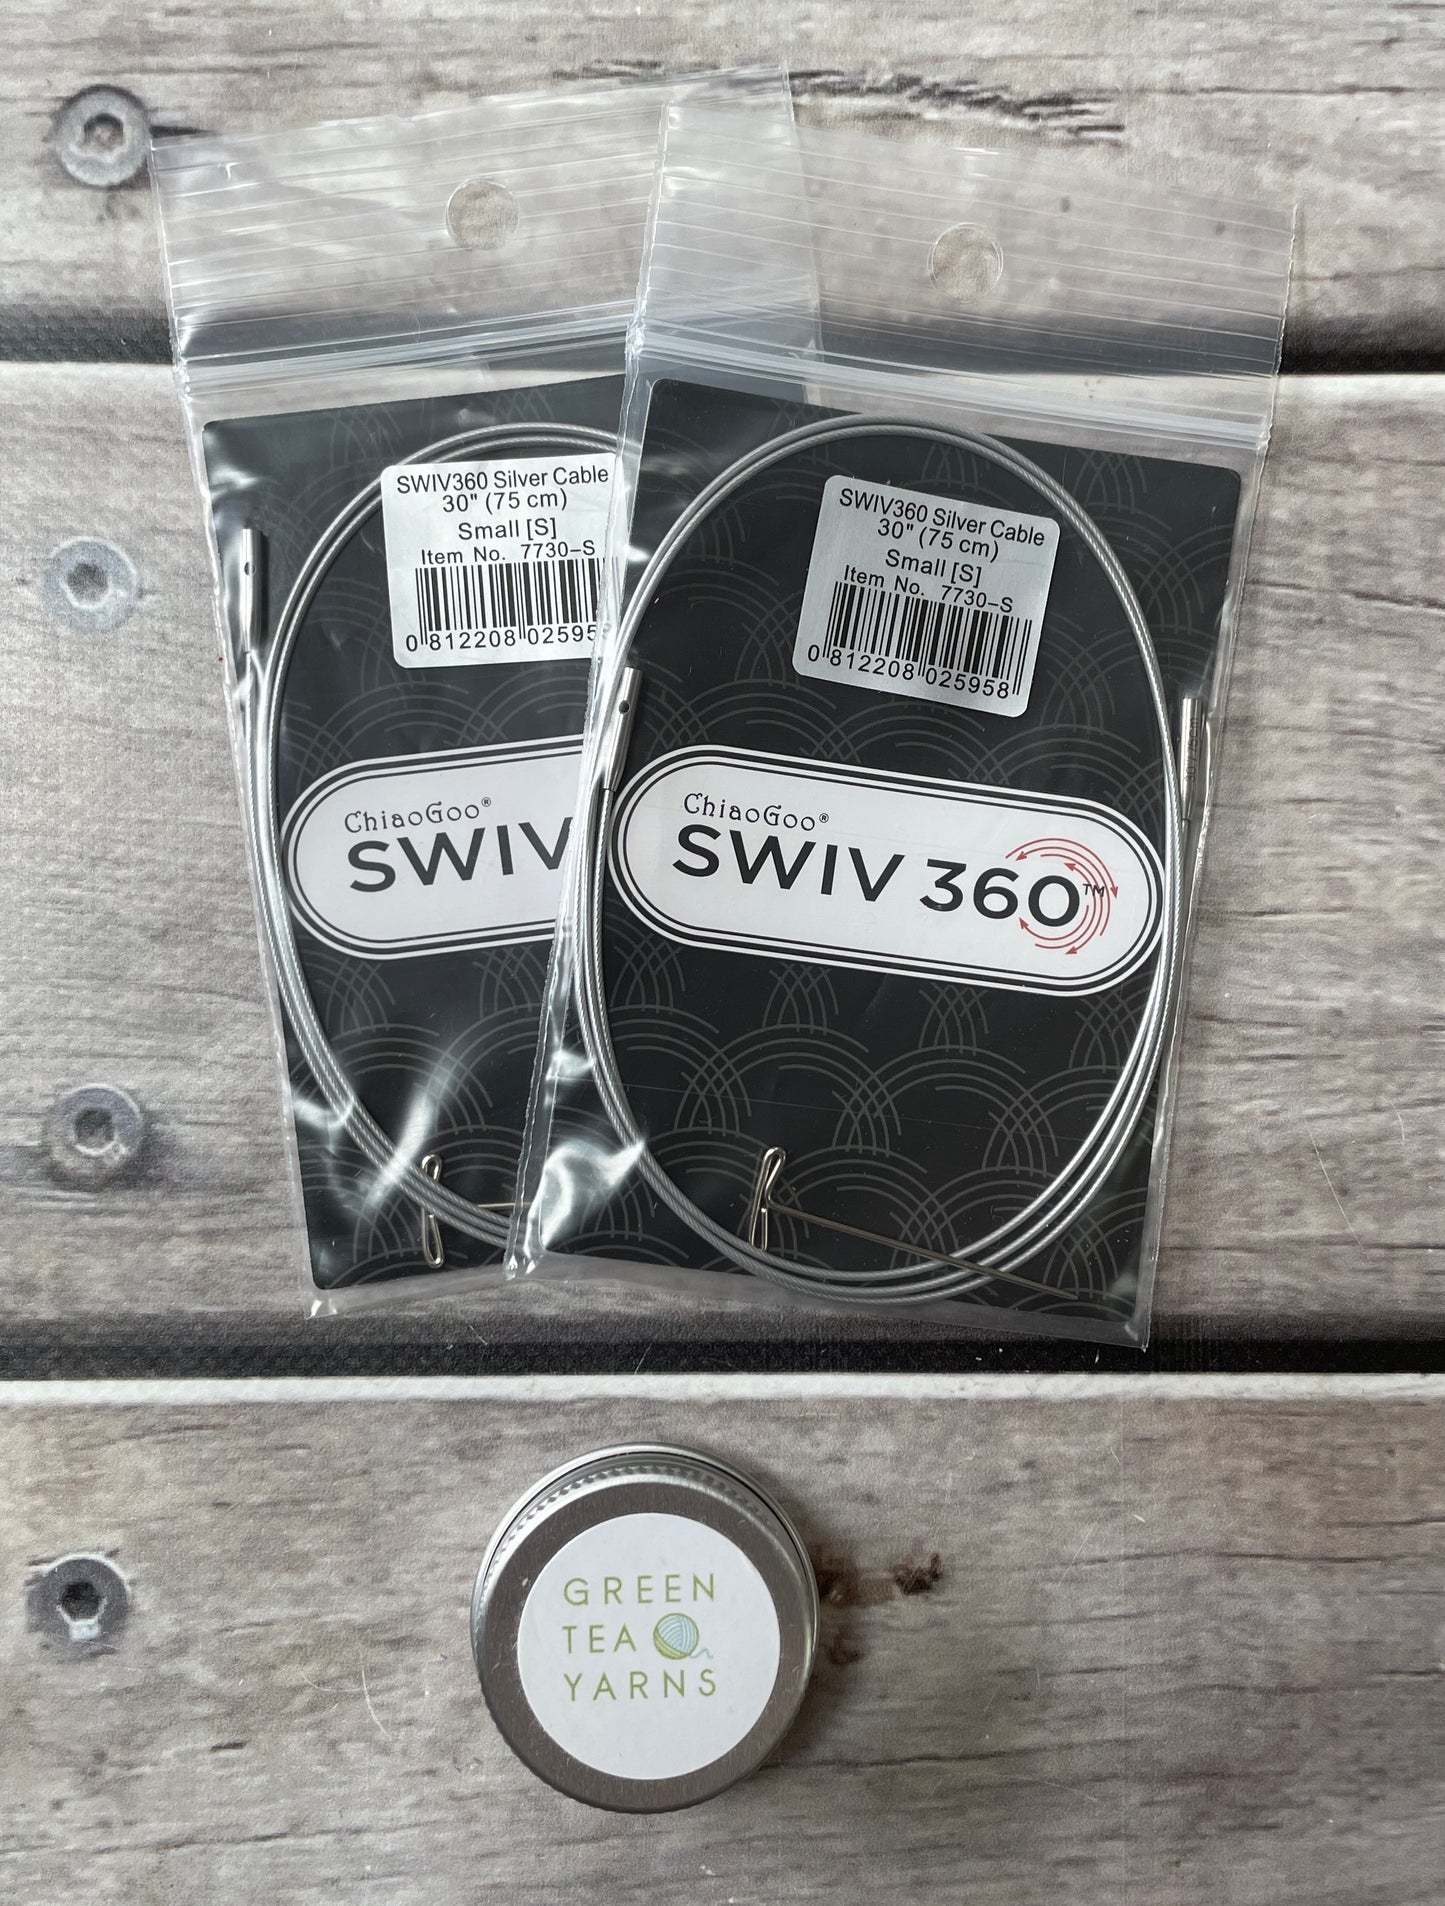 NEW ChiaoGoo SWIV360 Cables - small